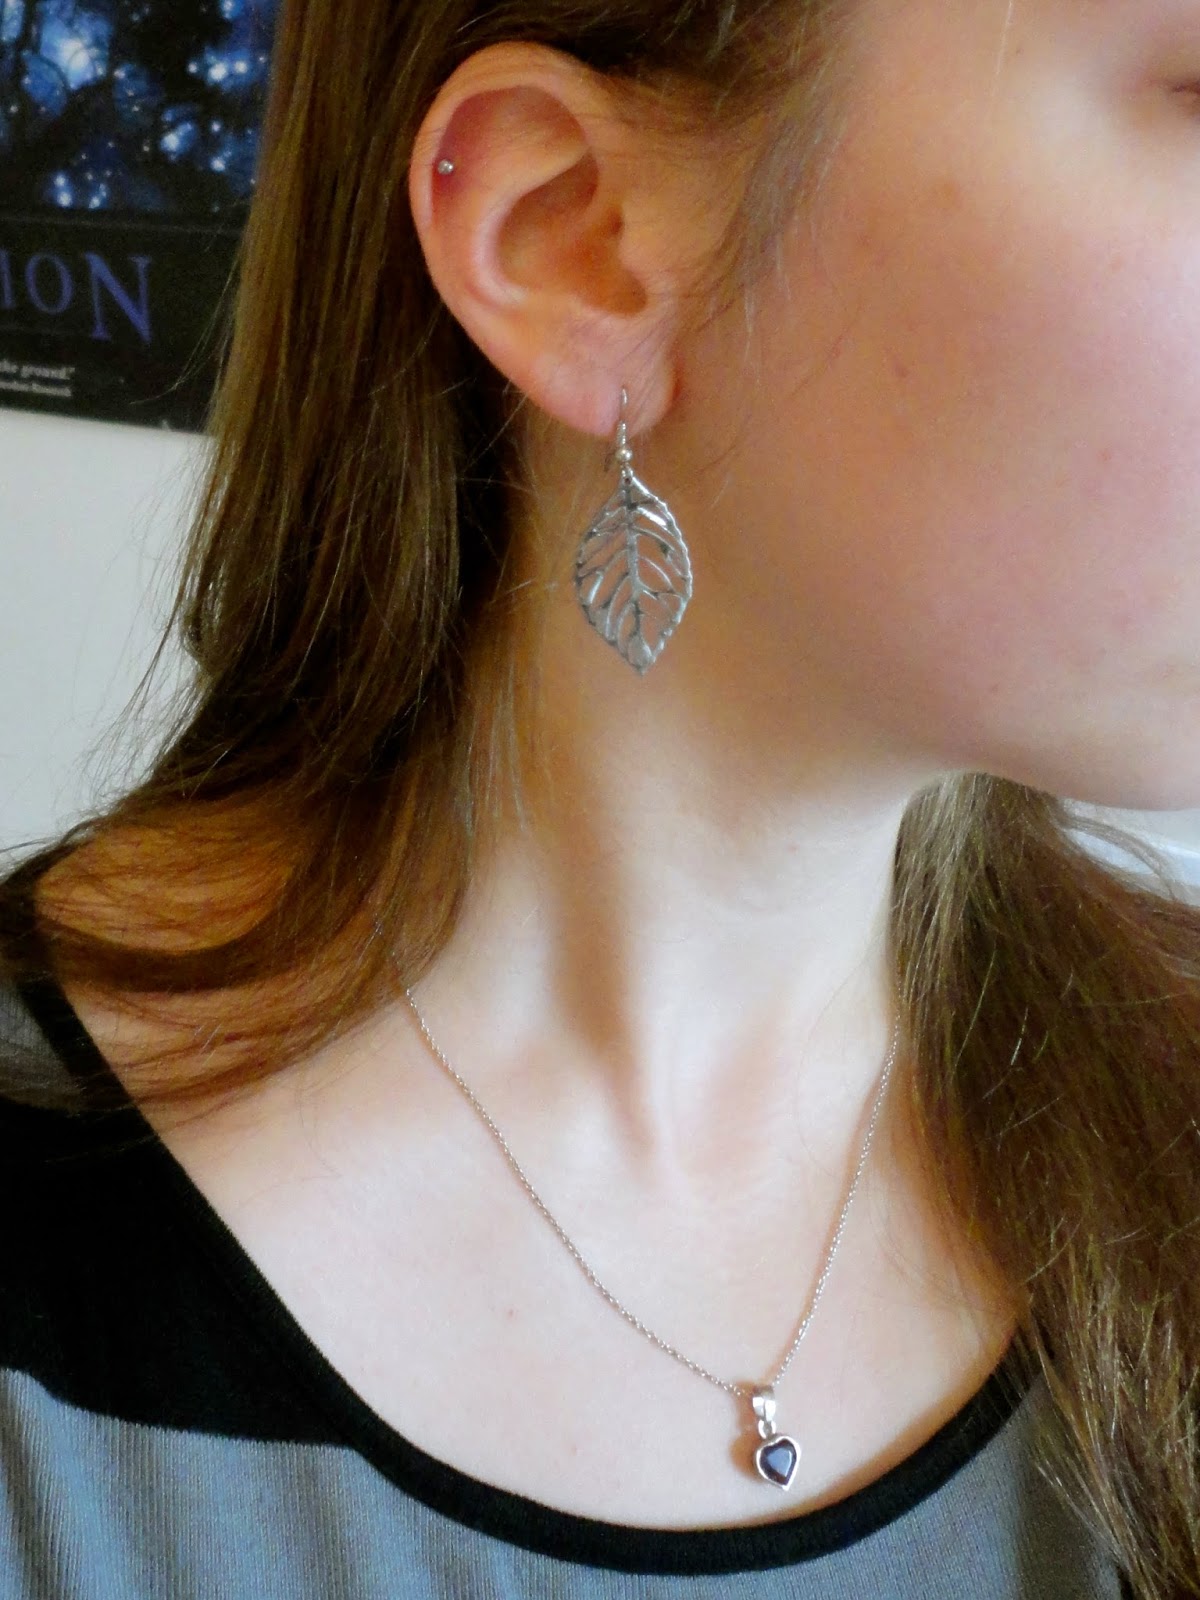 purple heart necklace, silver leaf earrings and helix piercing